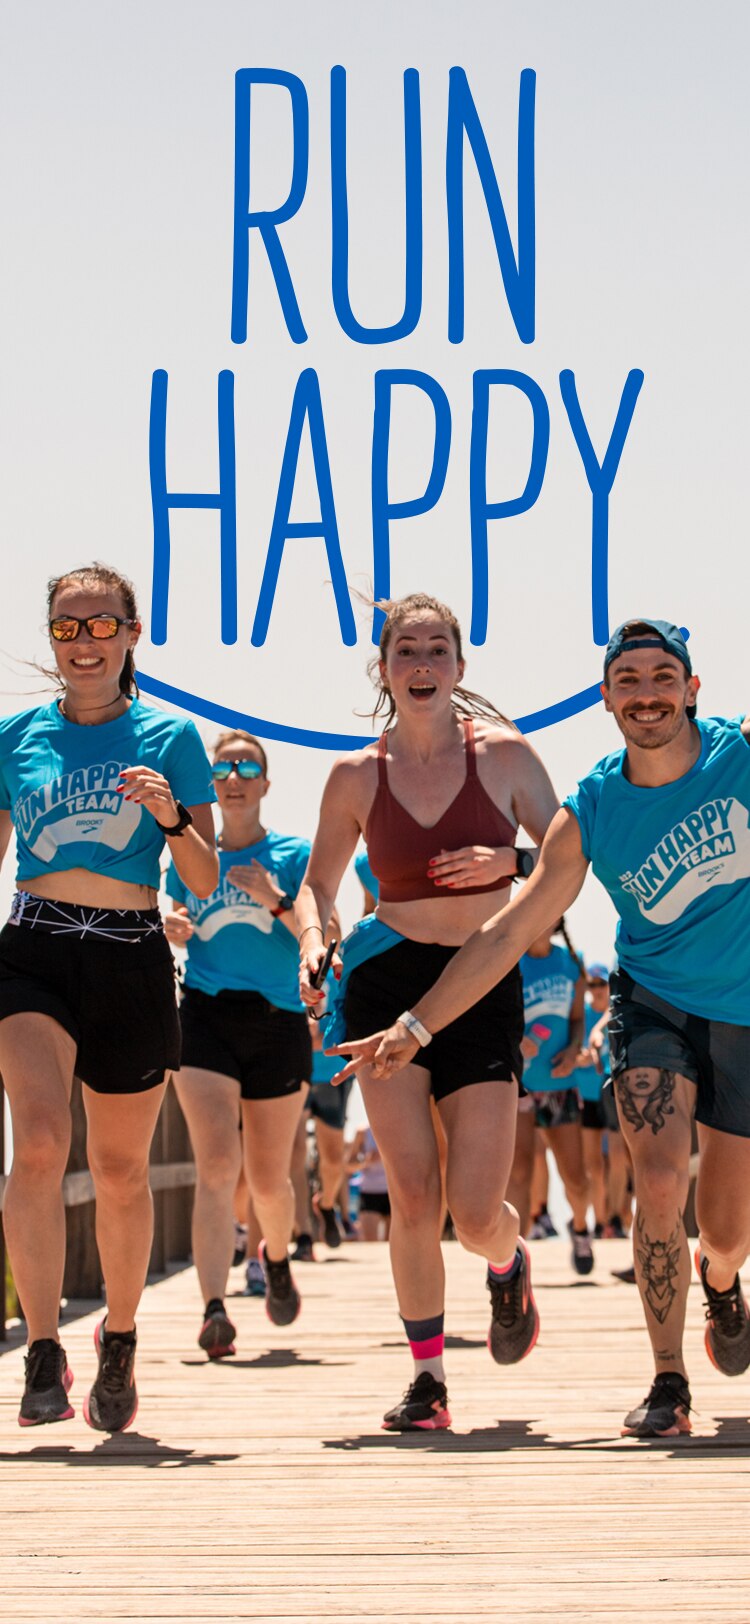 Un gruppo di runner felici